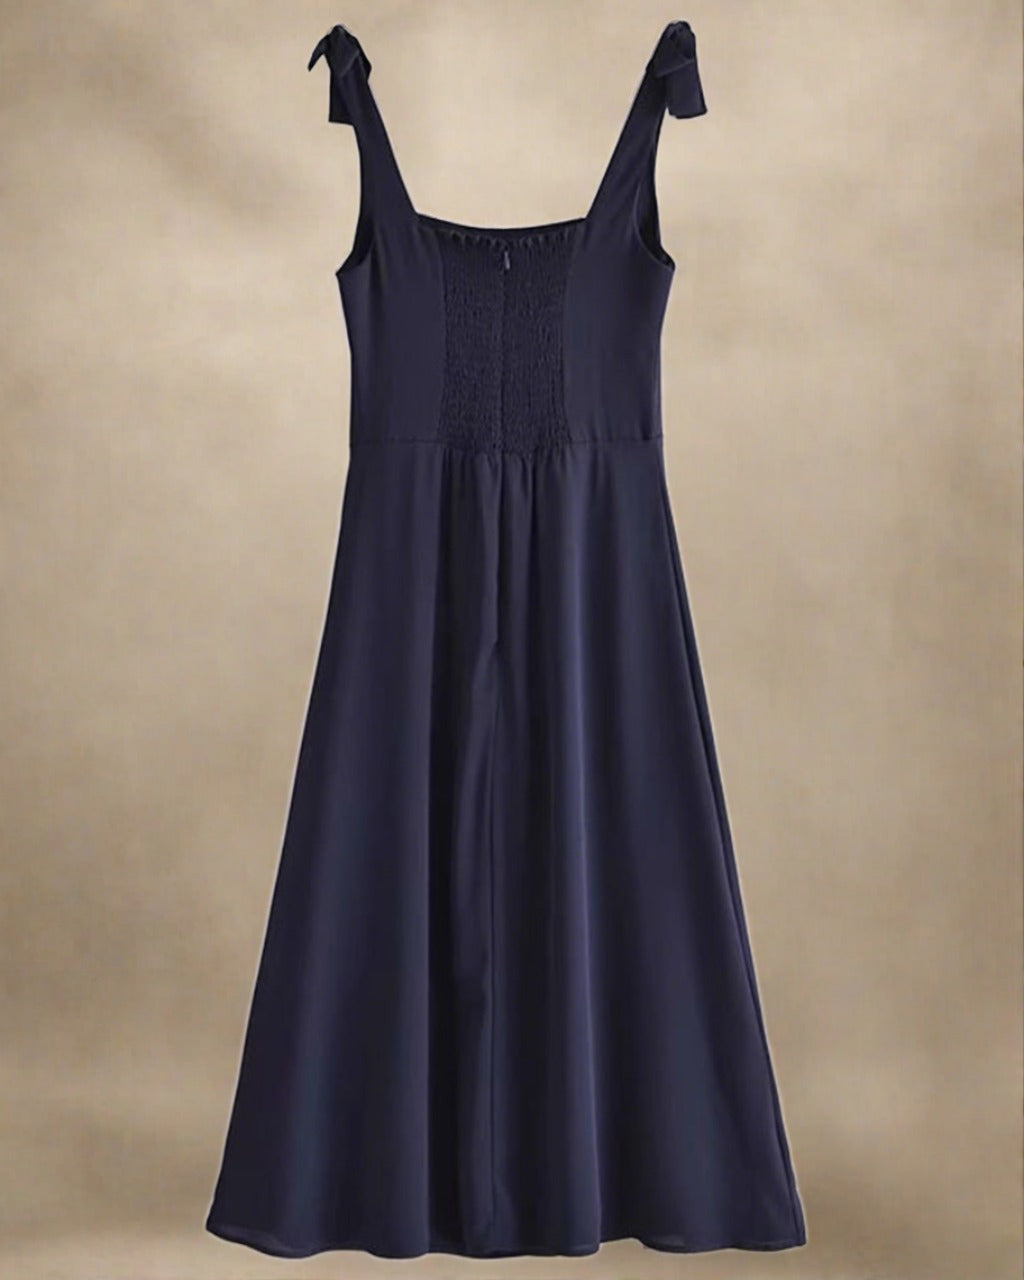 Oceane Blue Strappy Dress - Square Neck Midi Dress